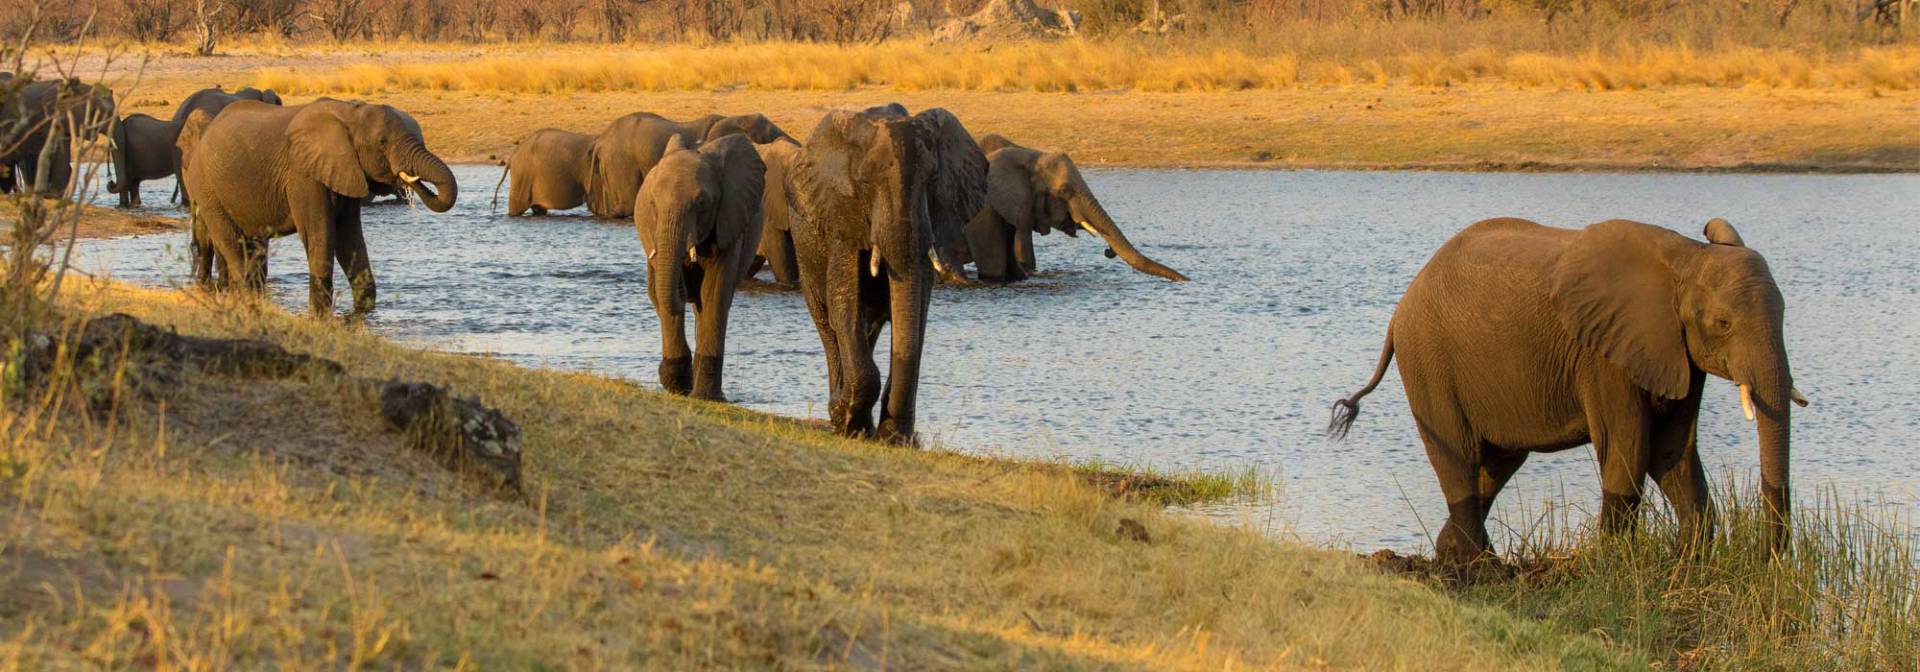 Elephants in Caprivi National Park